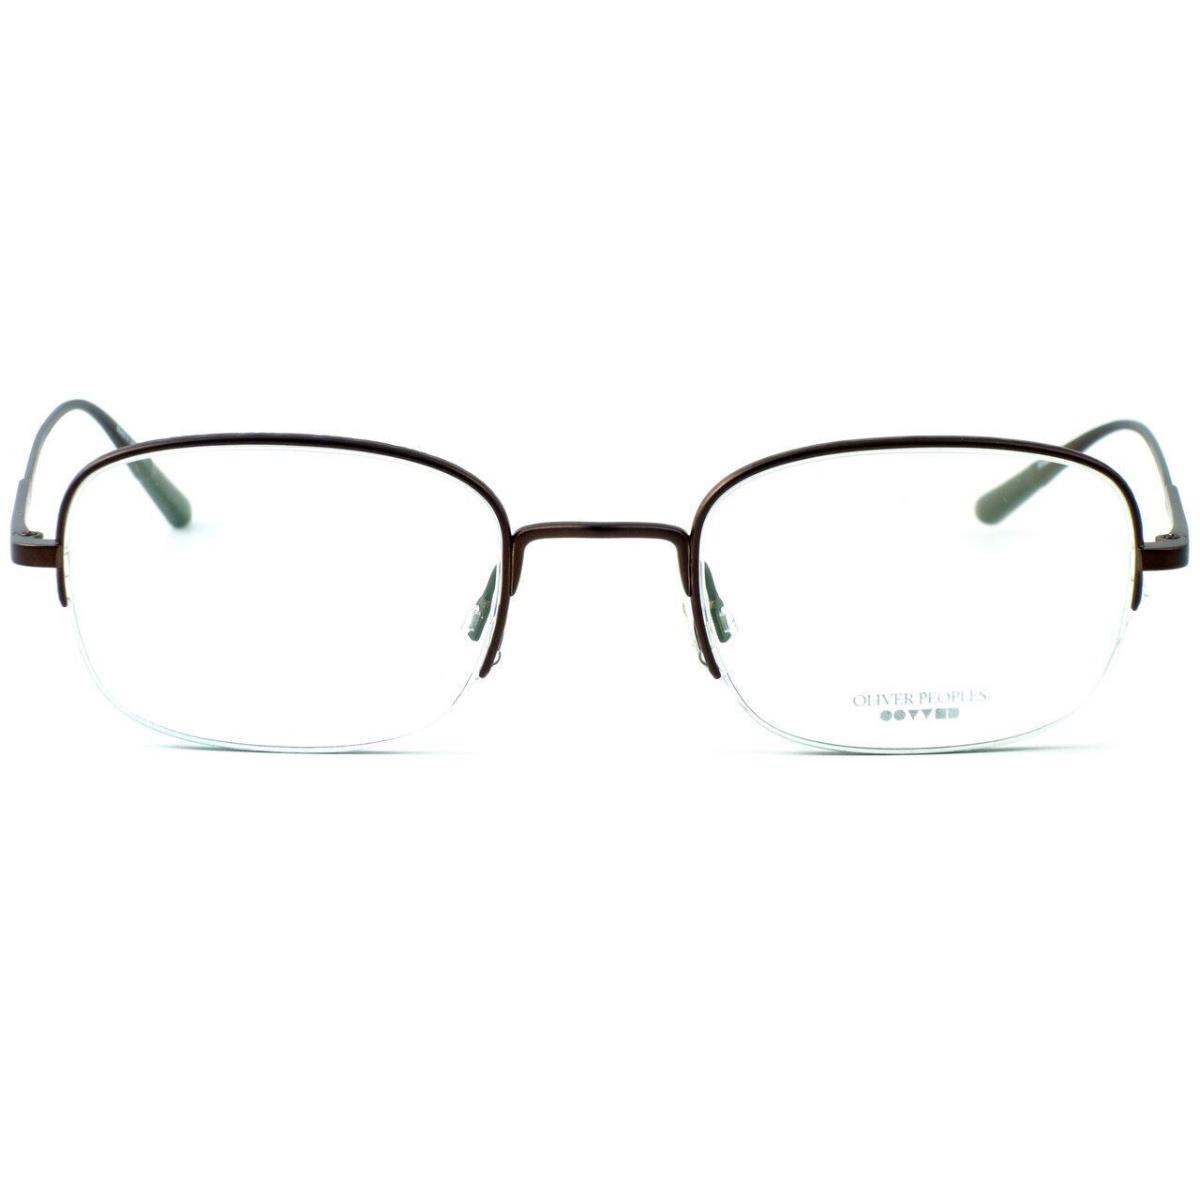 Oliver Peoples Optical Eyeglasses Wainwright 1118T in Brown 5075 47 mm